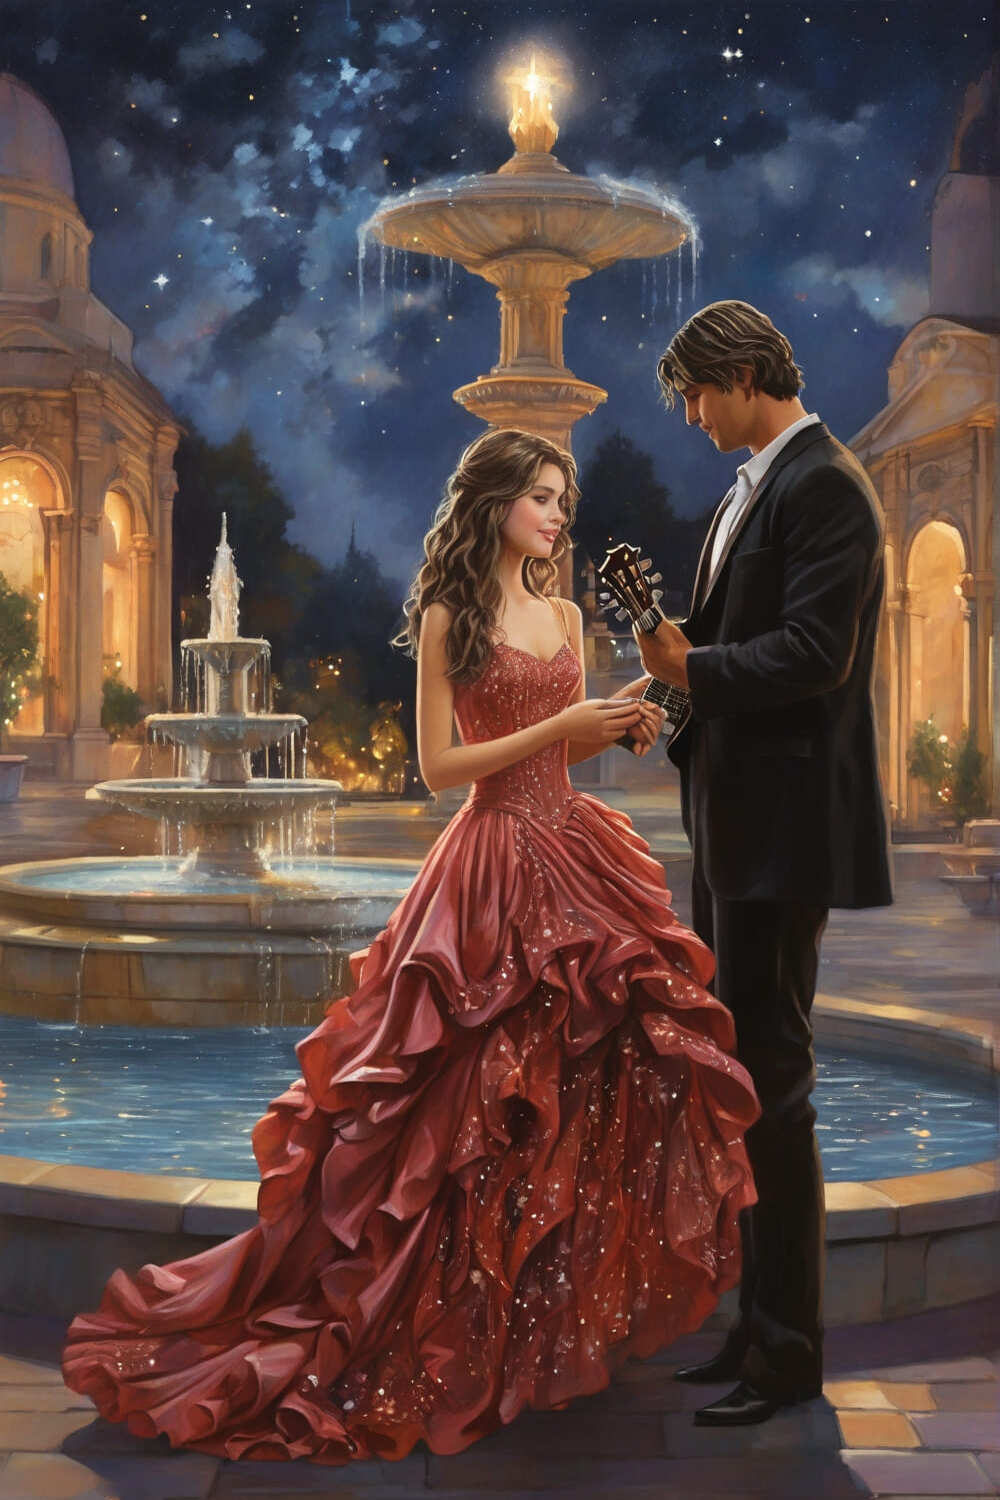 postcard, girl in a ballgown, man, stars, guitar, fountain pinterest preview image.